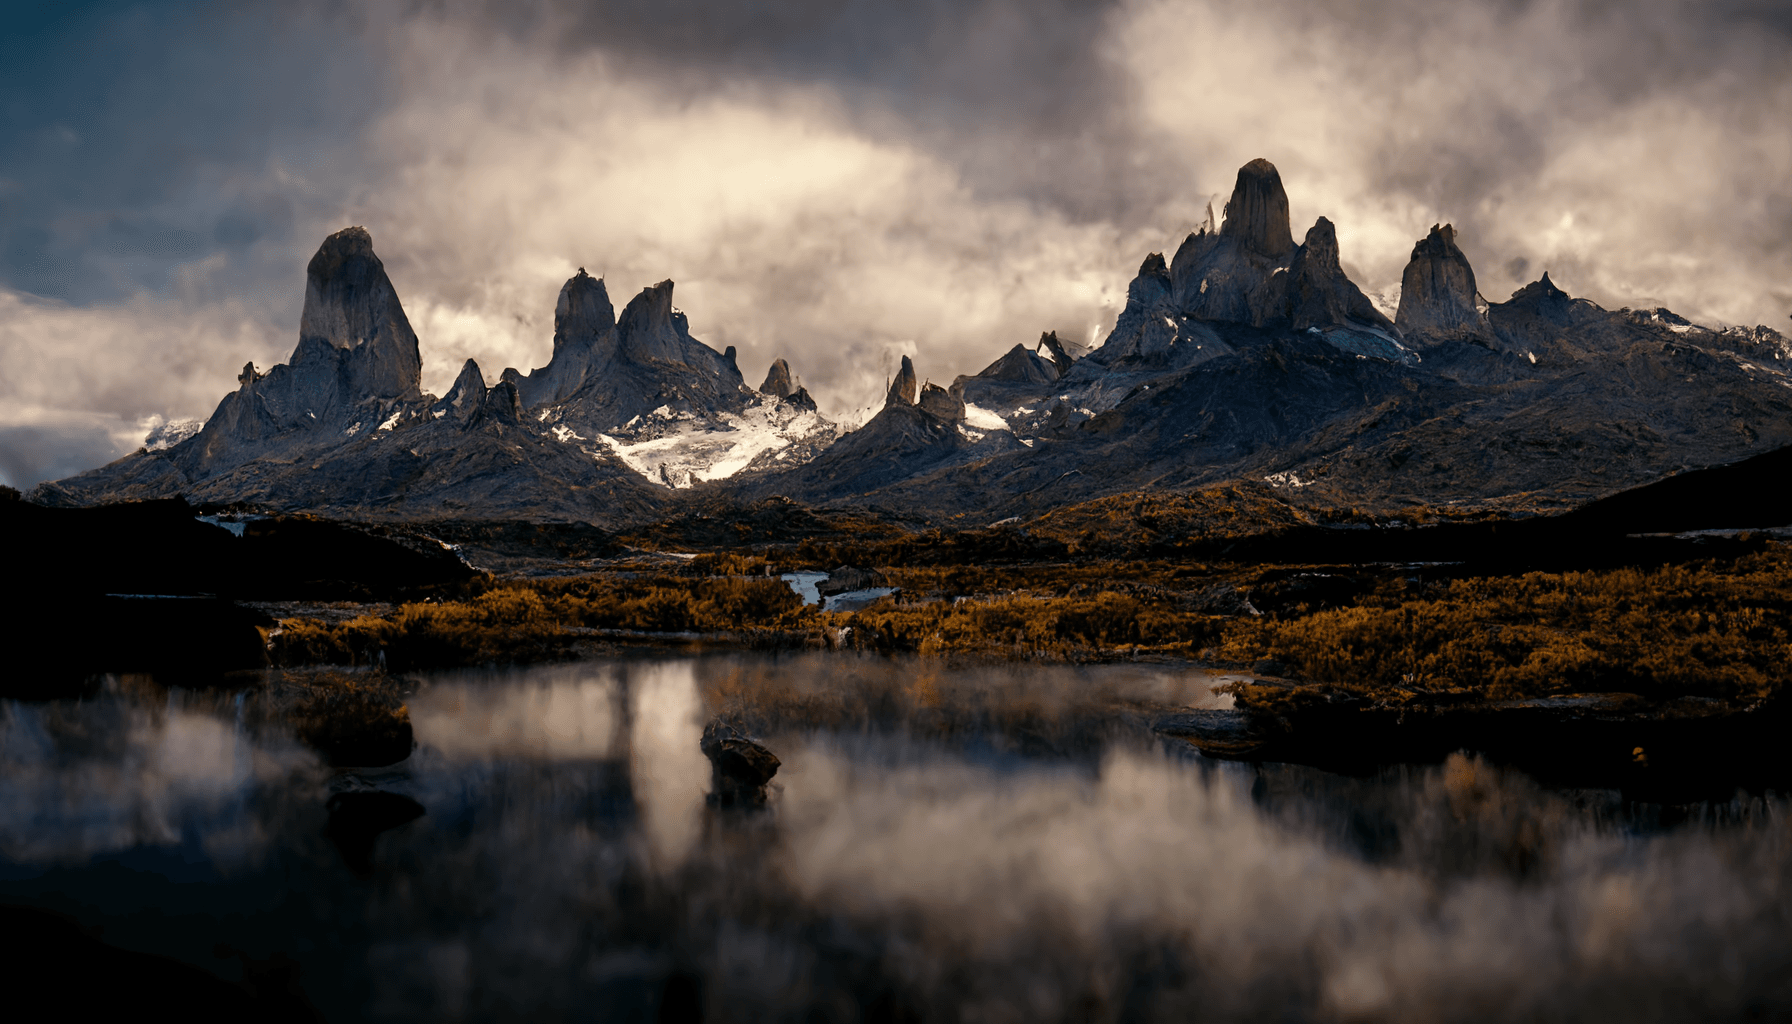 "Torres Del Paine"